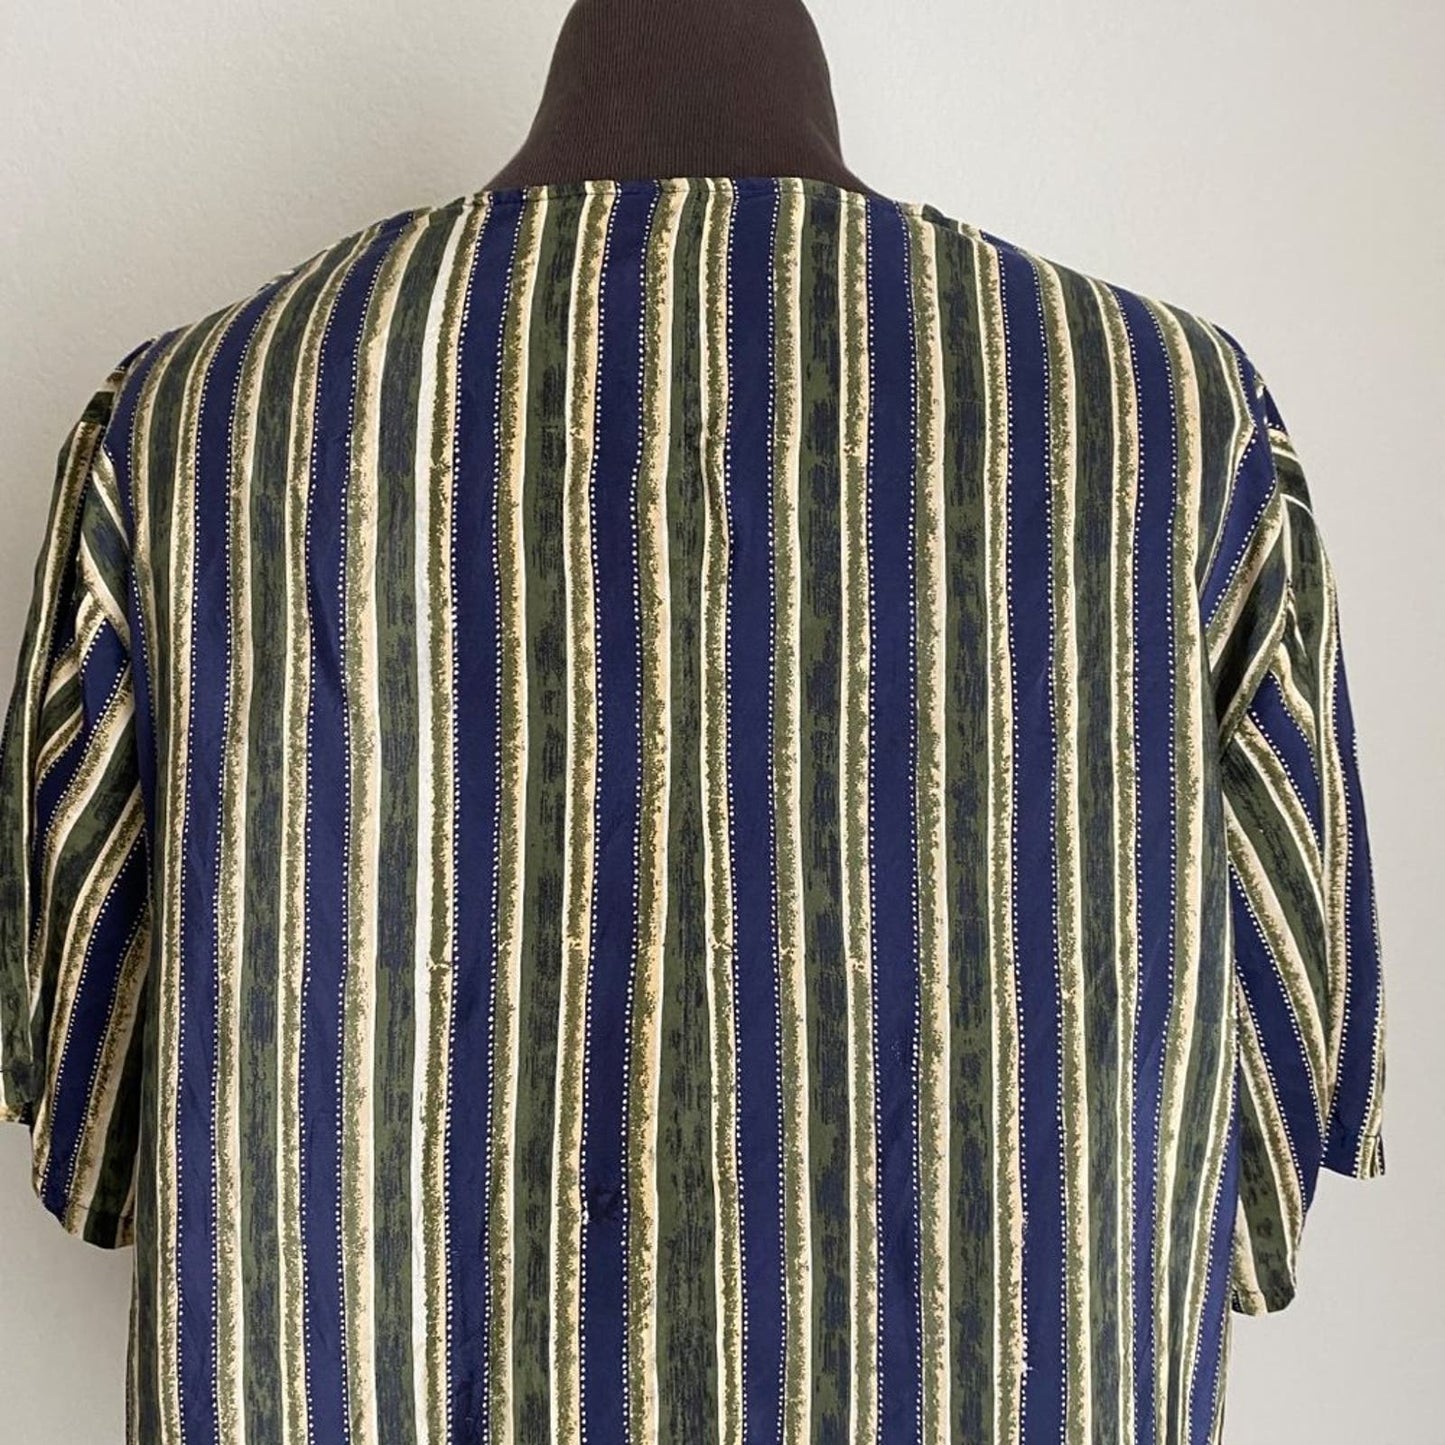 Melrose Studio sz M striped boho shirt blouse